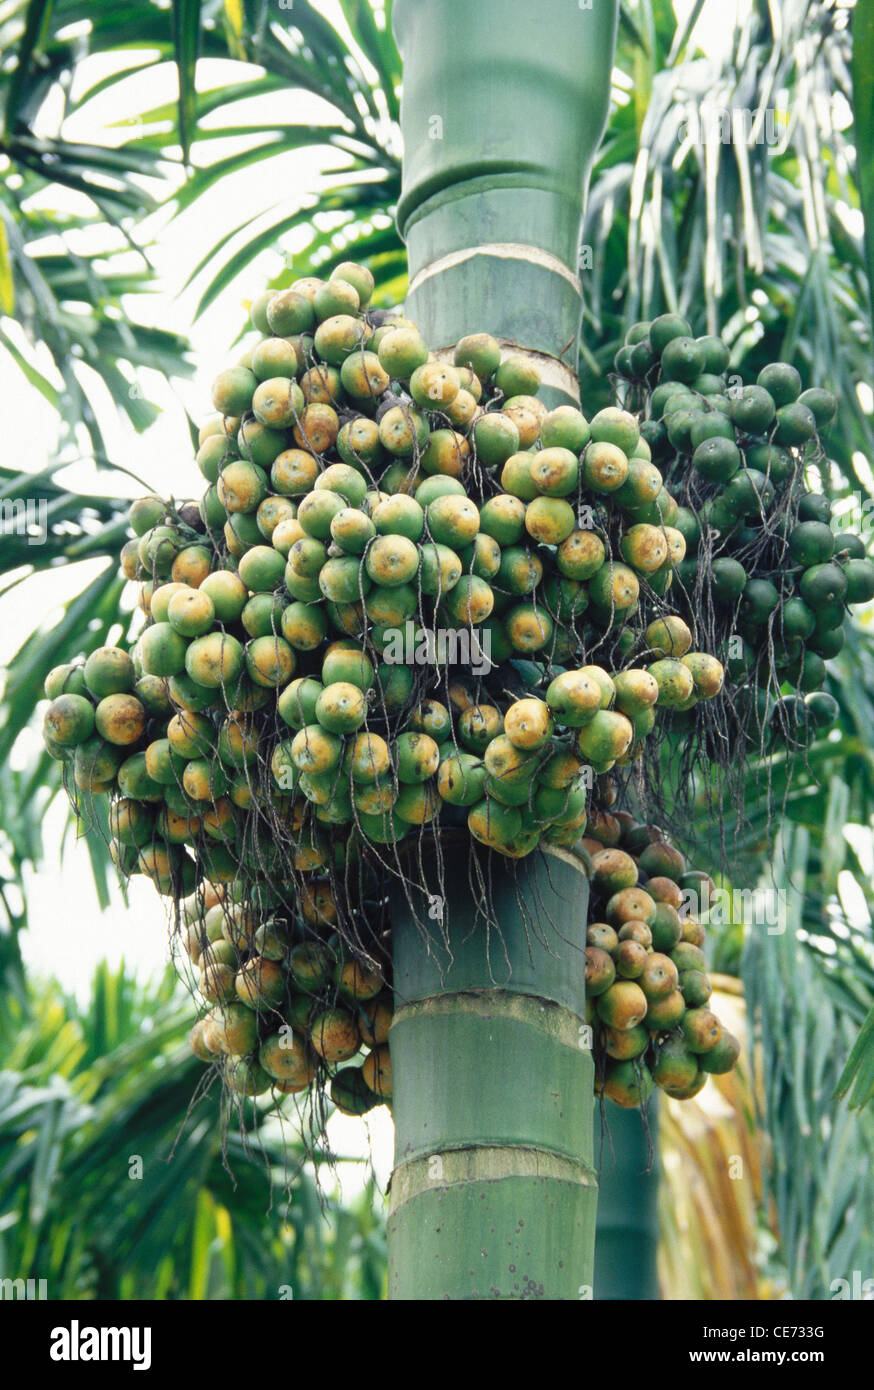 Areca nut palm tree ; Betel nut tree ; Karnataka ; India ; asia Stock Photo  - Alamy